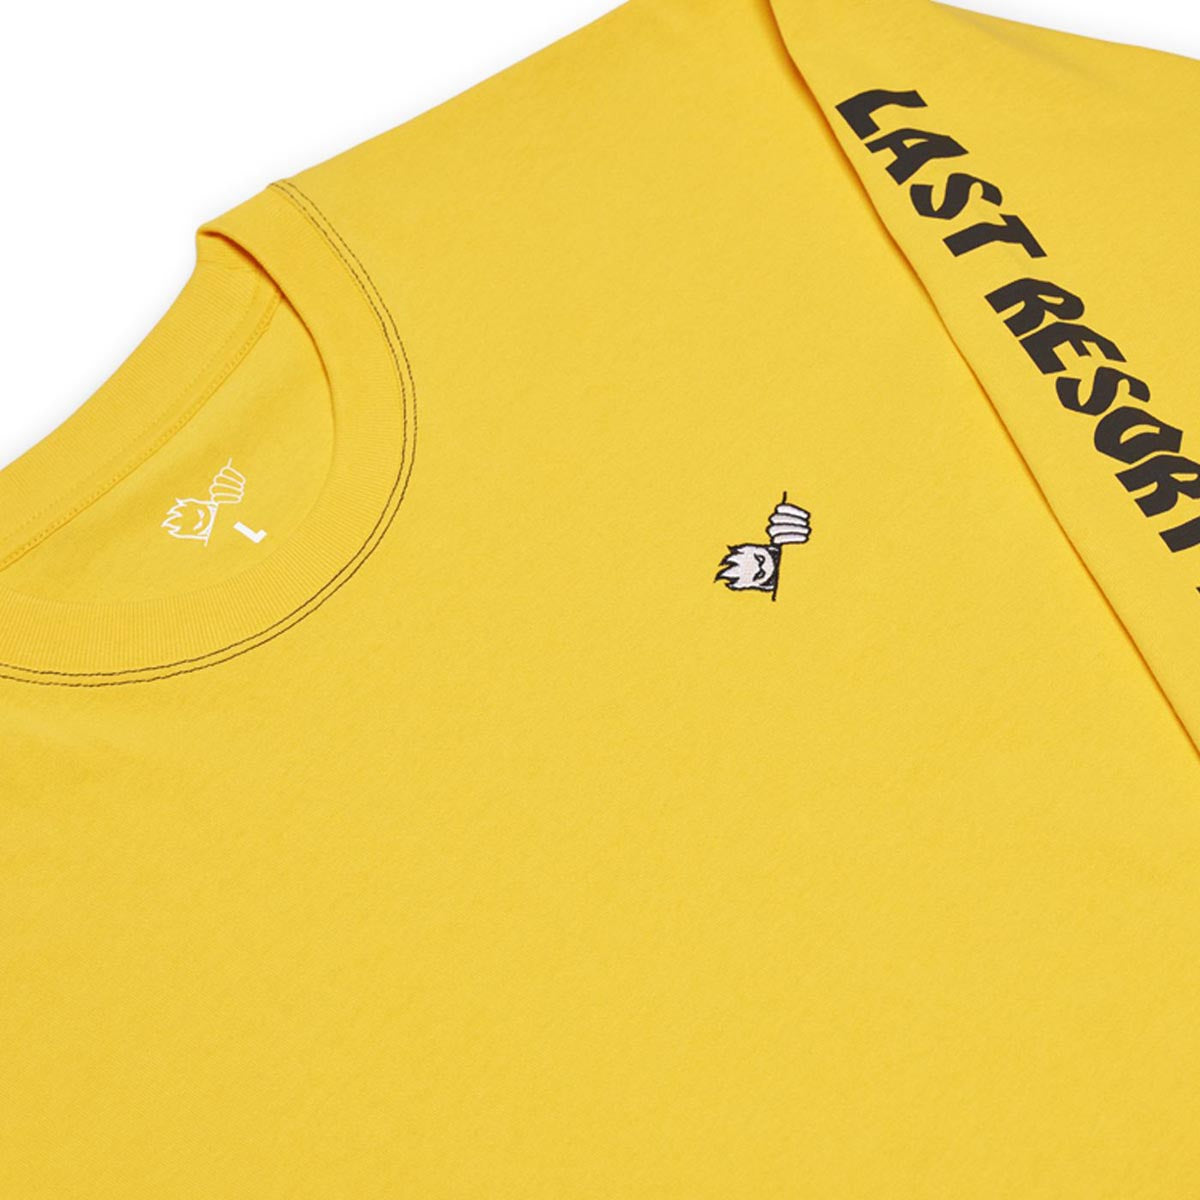 Last Resort AB x Spitfire Long Sleeve T-Shirt - Yellow image 3